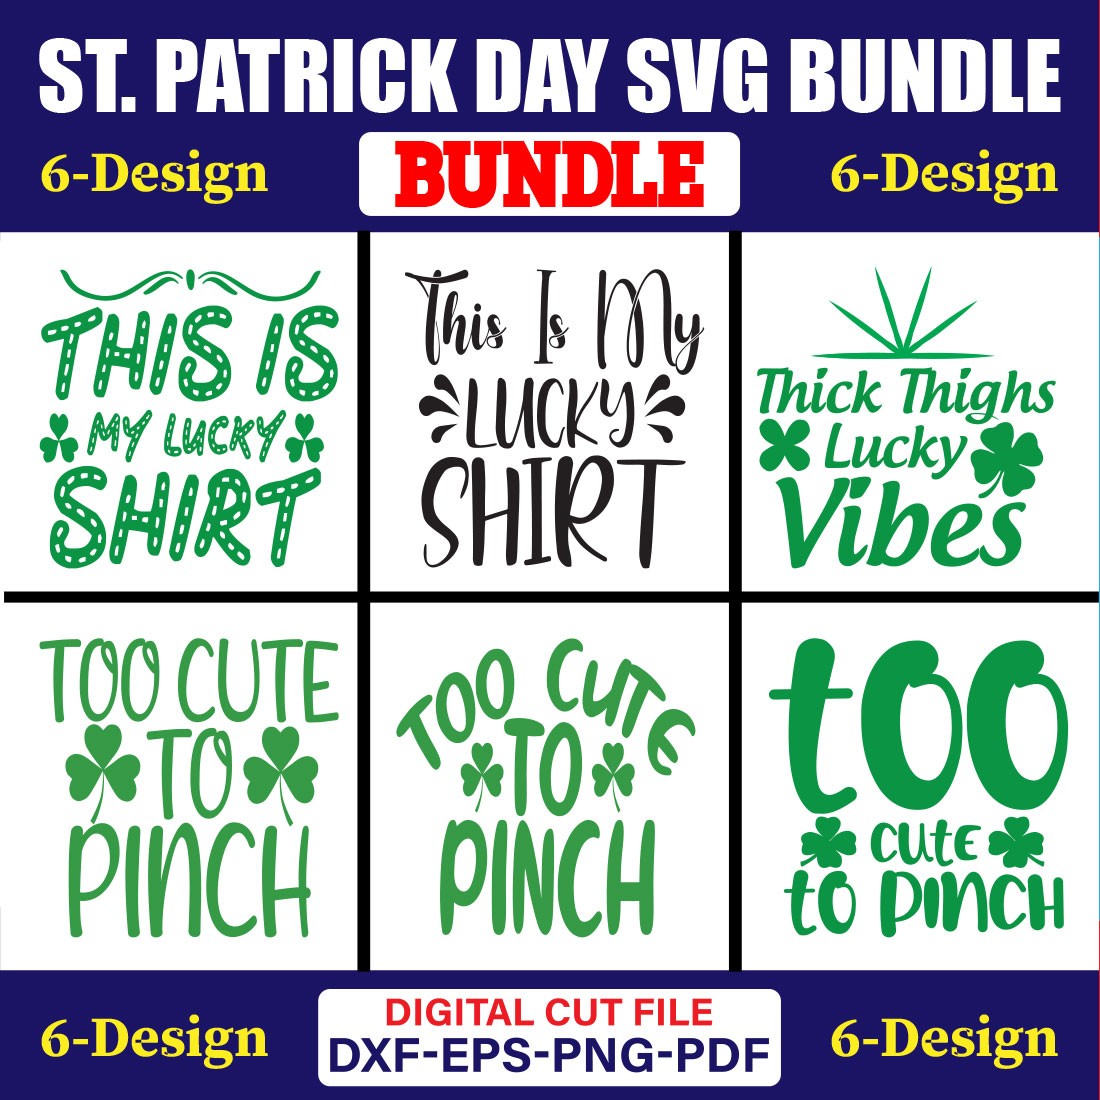 St Patrick Day SVG T-shirt Design Bundle Vol-32 cover image.